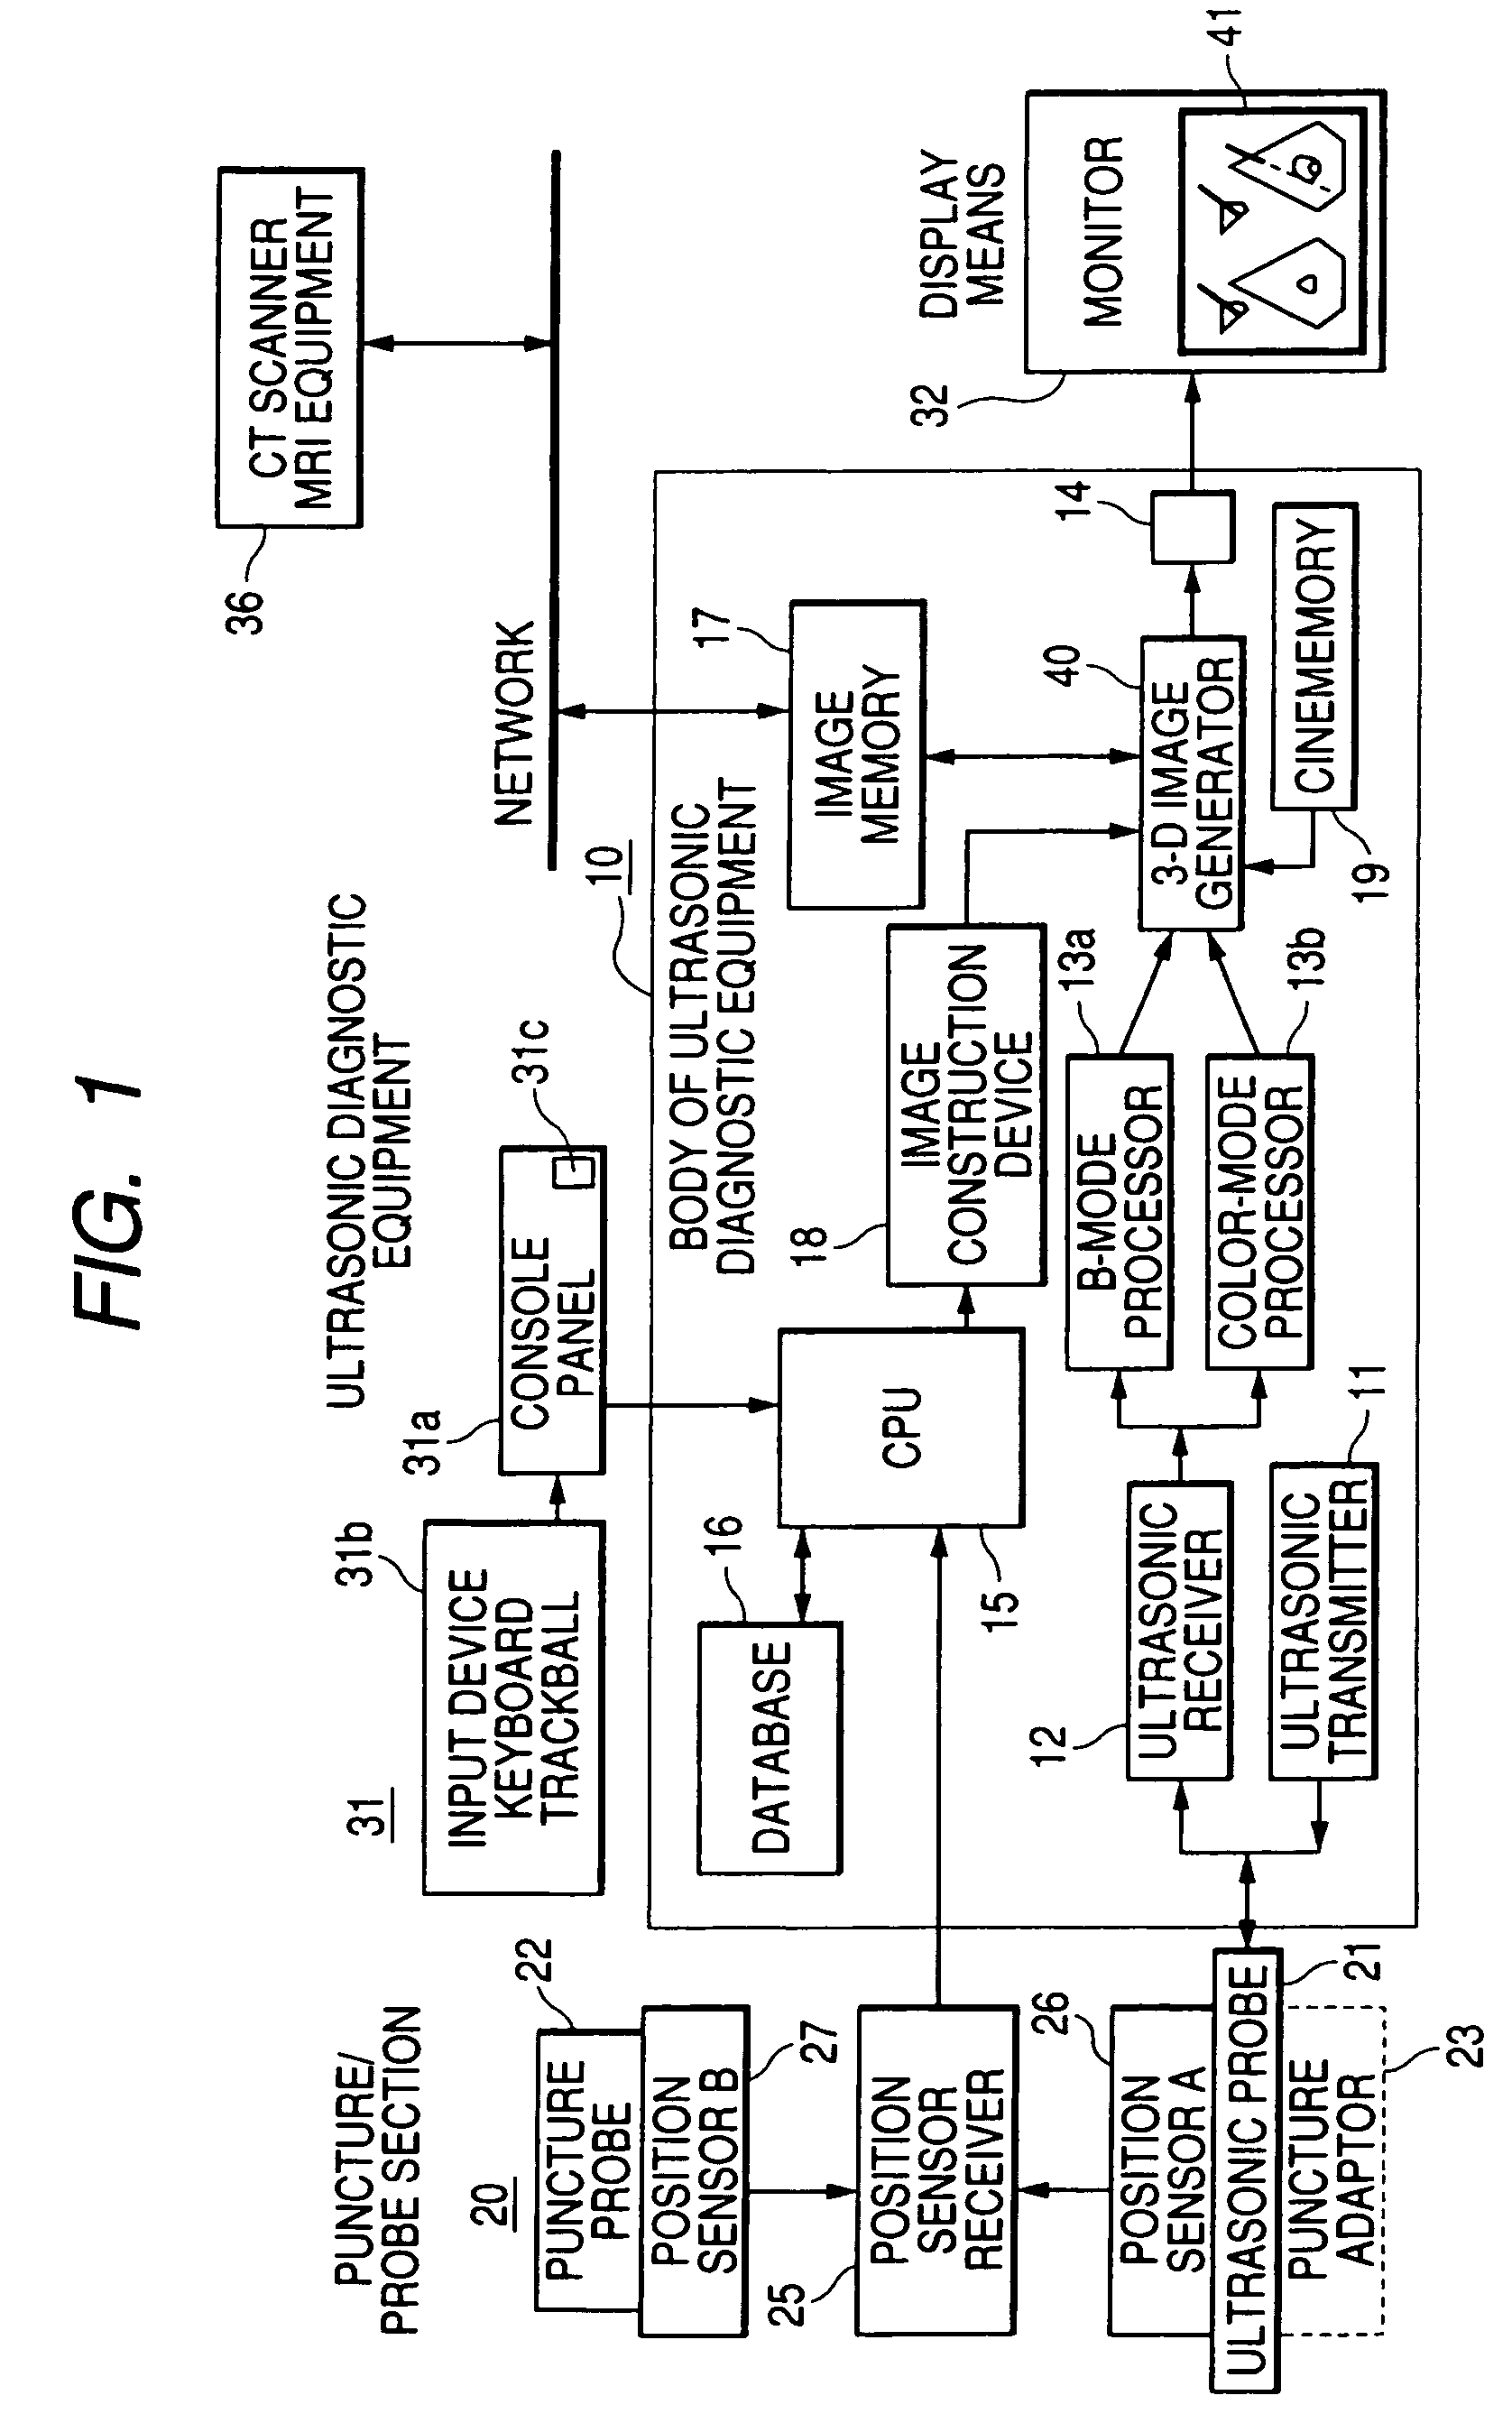 Ultrasonic diagnostic apparatus